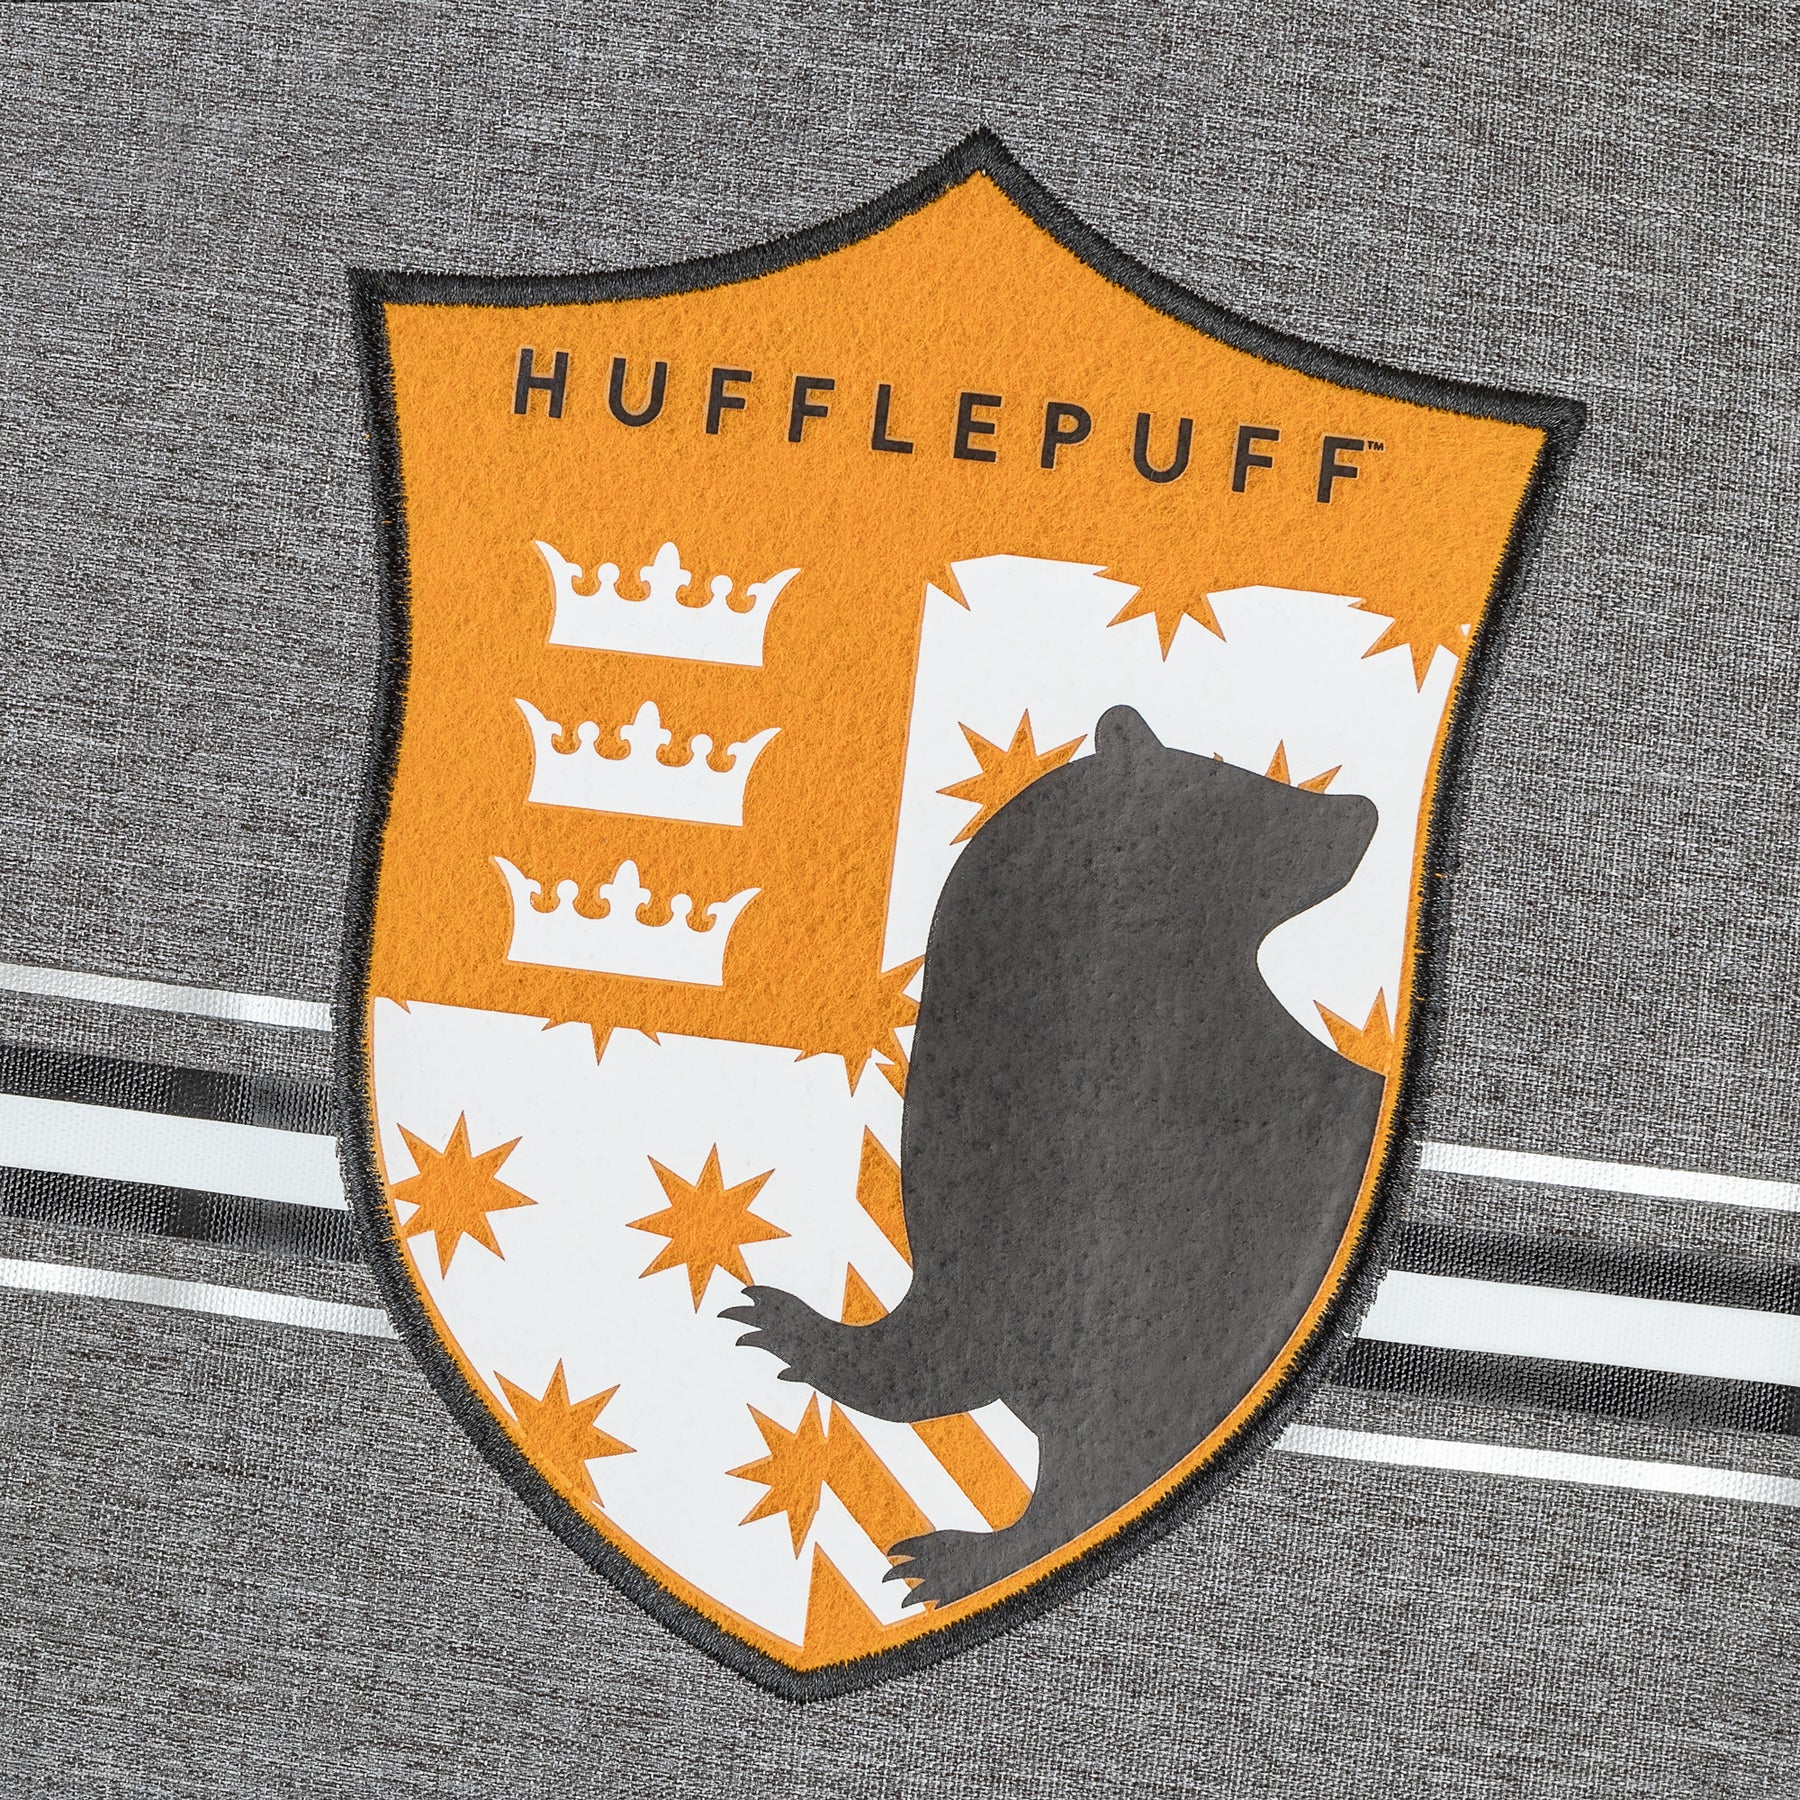 Harry Potter Hufflepuff Heathered Pocket Premium Backpack